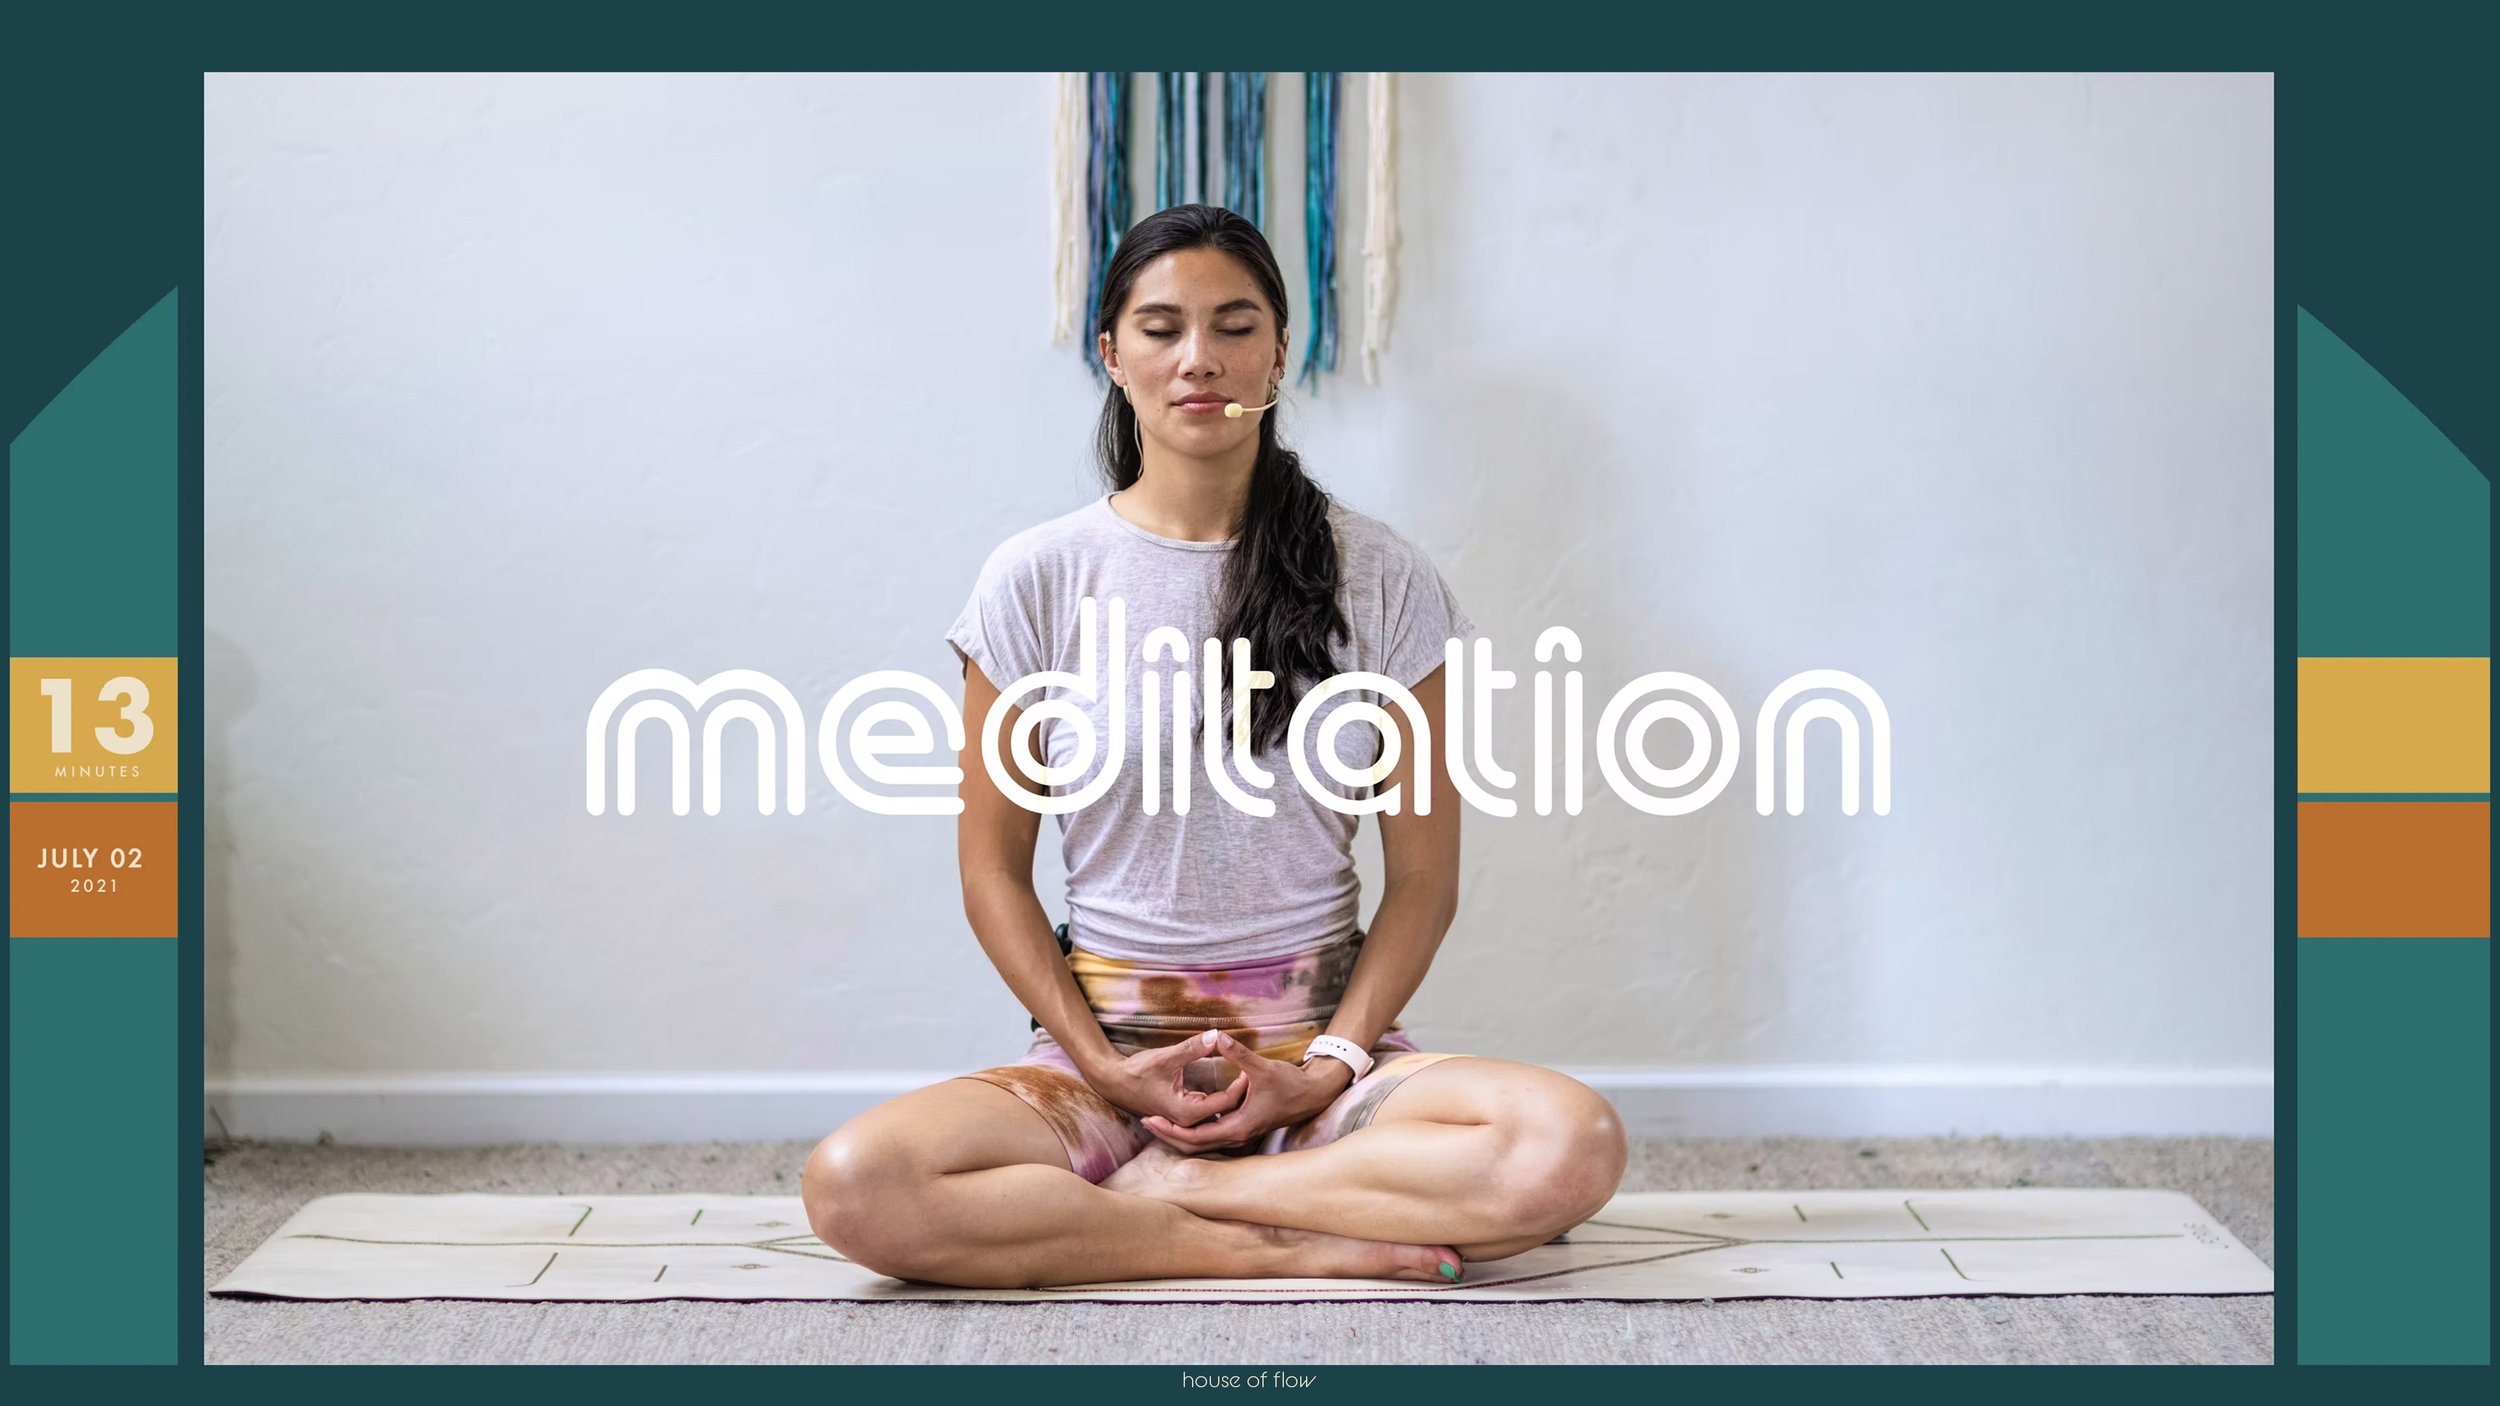 Meditation | Positivity | 13 minutes